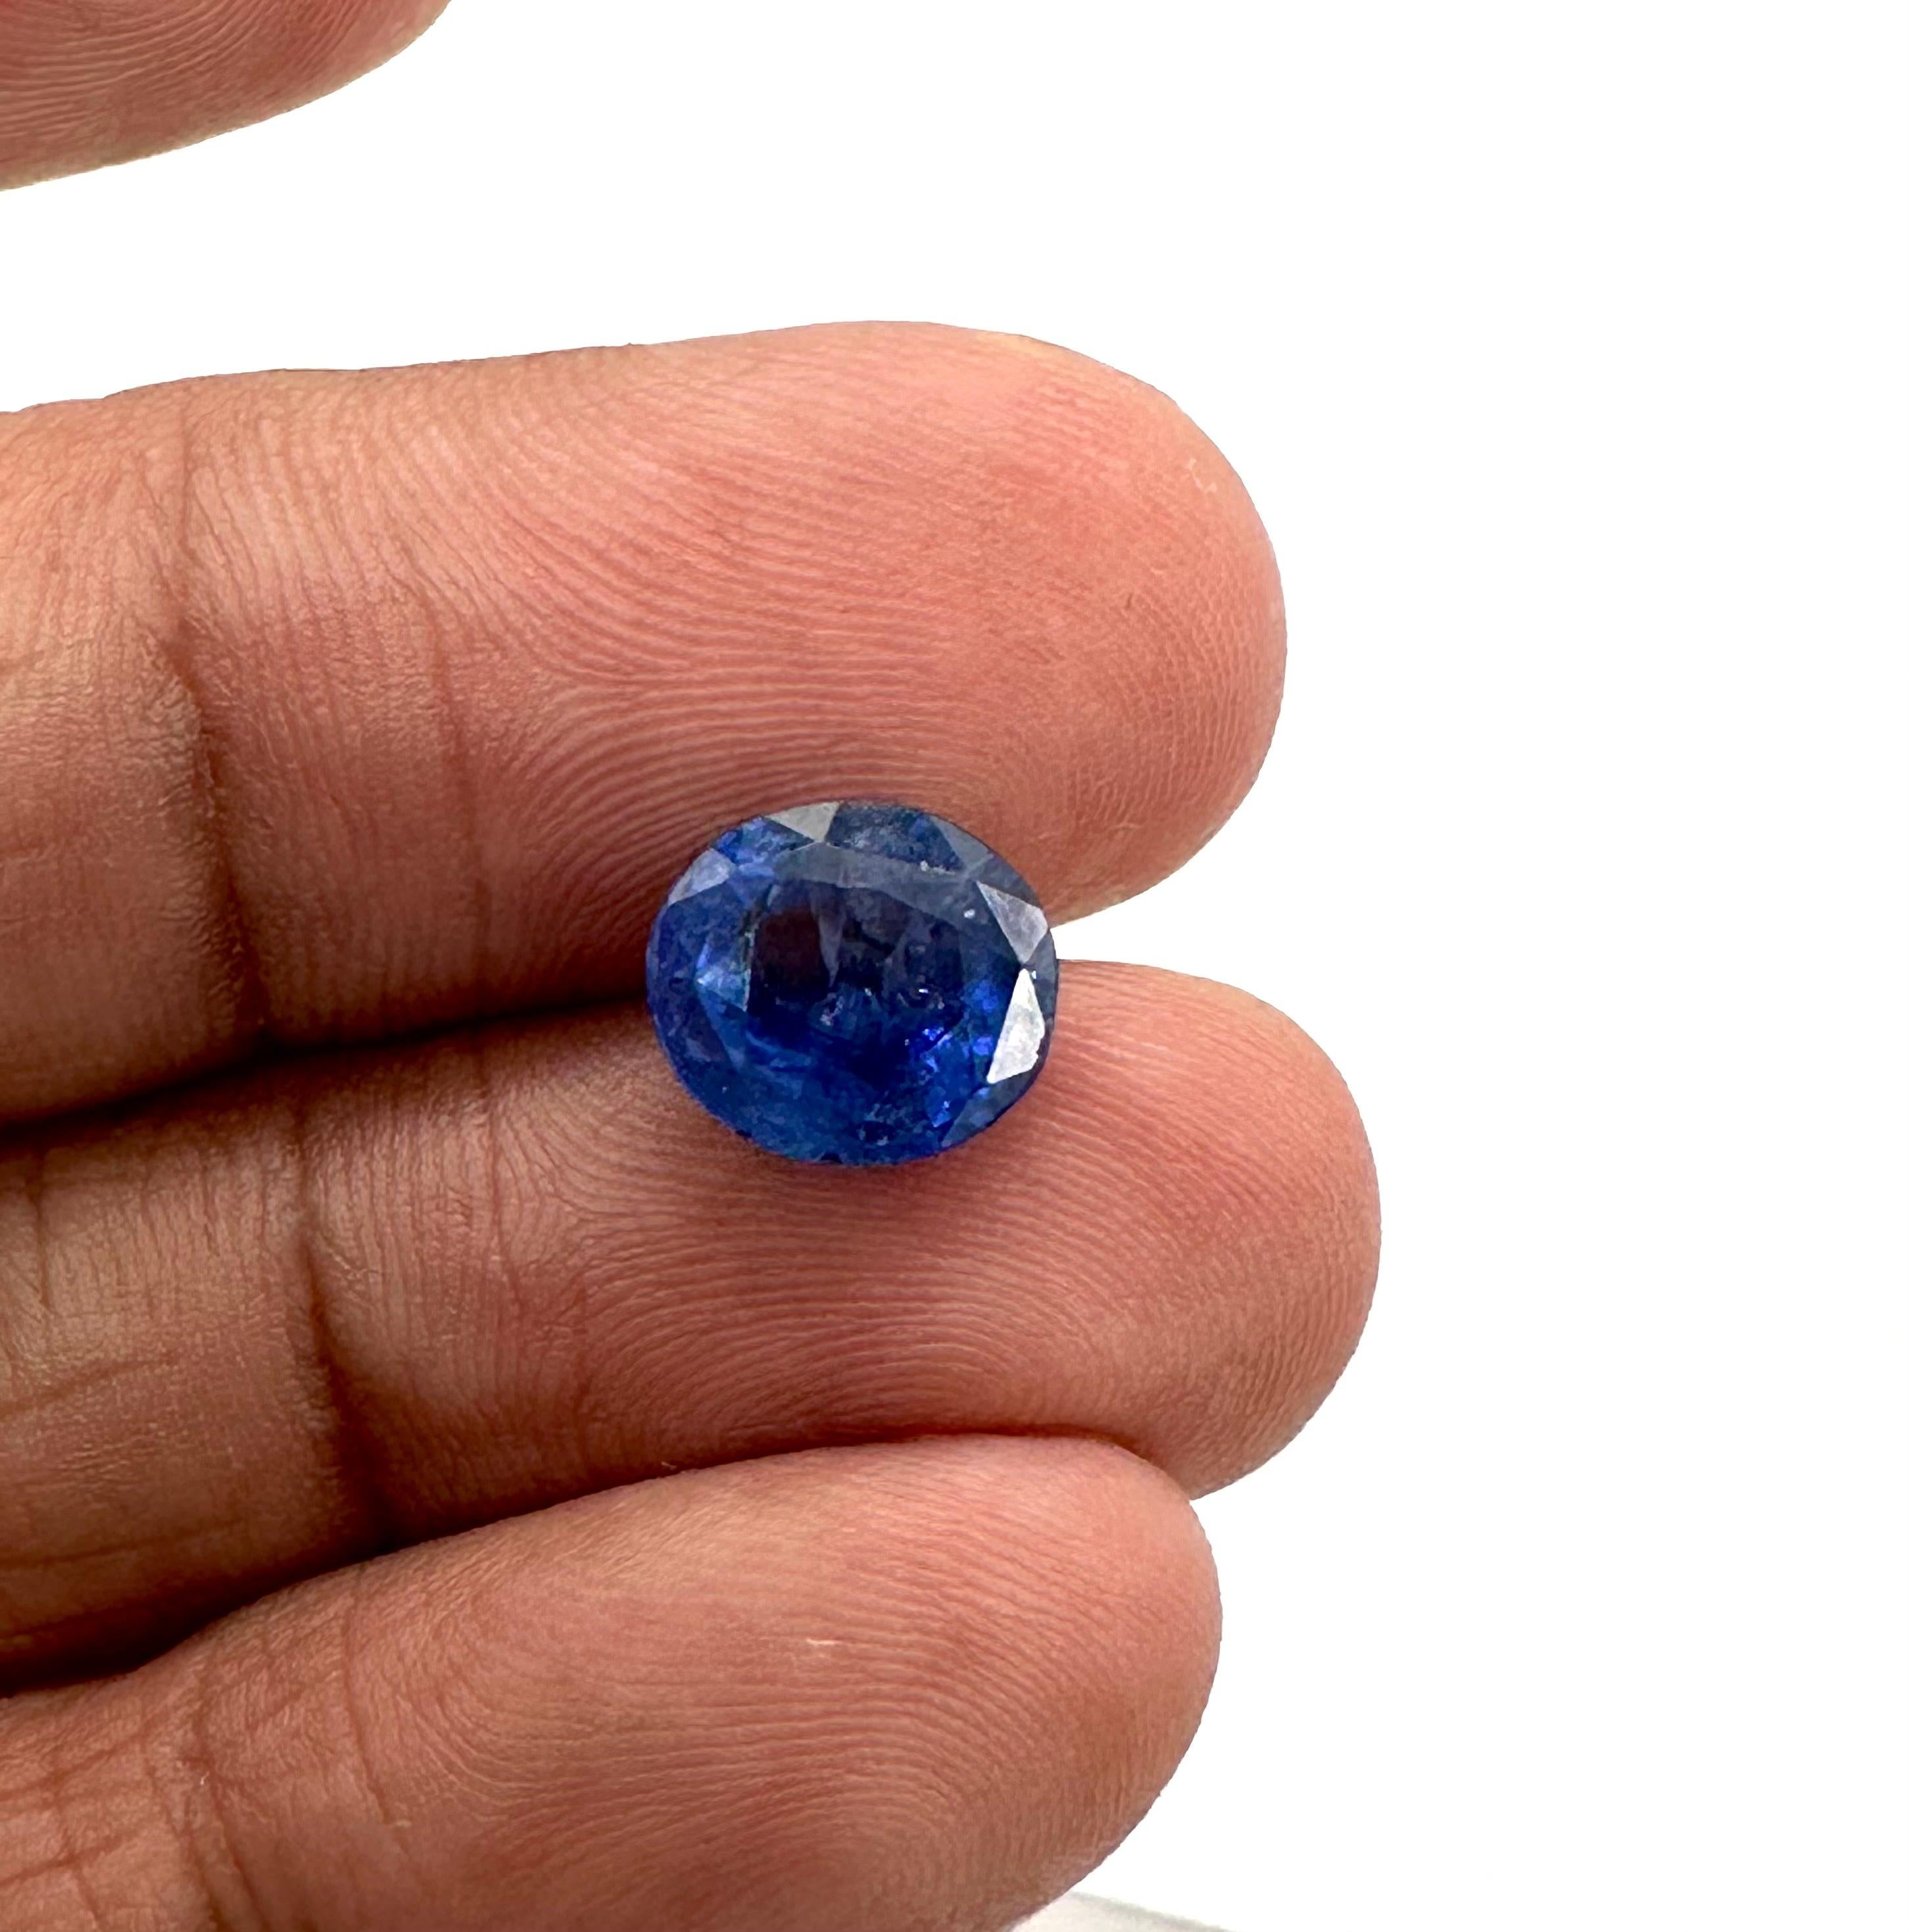 Certified no heat no treatment Natural oval shape 4.82carat Blue sapphire  
Carat: 4.82 cts
Colour: Blue
L x W x D (mm): 10.1 x 8.9 x 5.9
Cut: Rectangular Cushion Mixed Cut
Clarity: Eye Clean
Treatment: Unheated
Origin: Ceylon